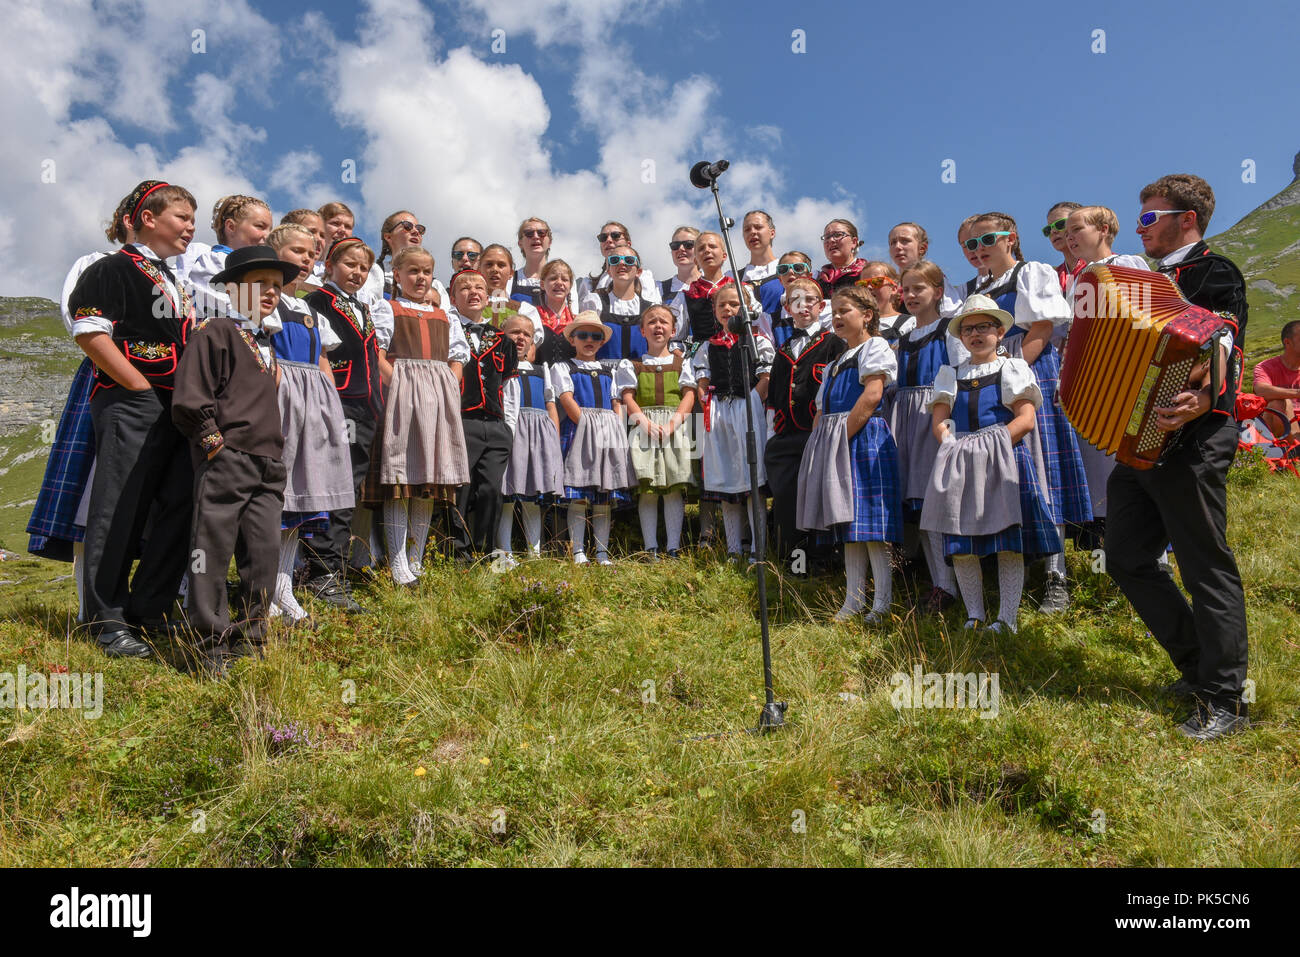 Swiss Traditional Dress Stockfotos und -bilder Kaufen - Alamy